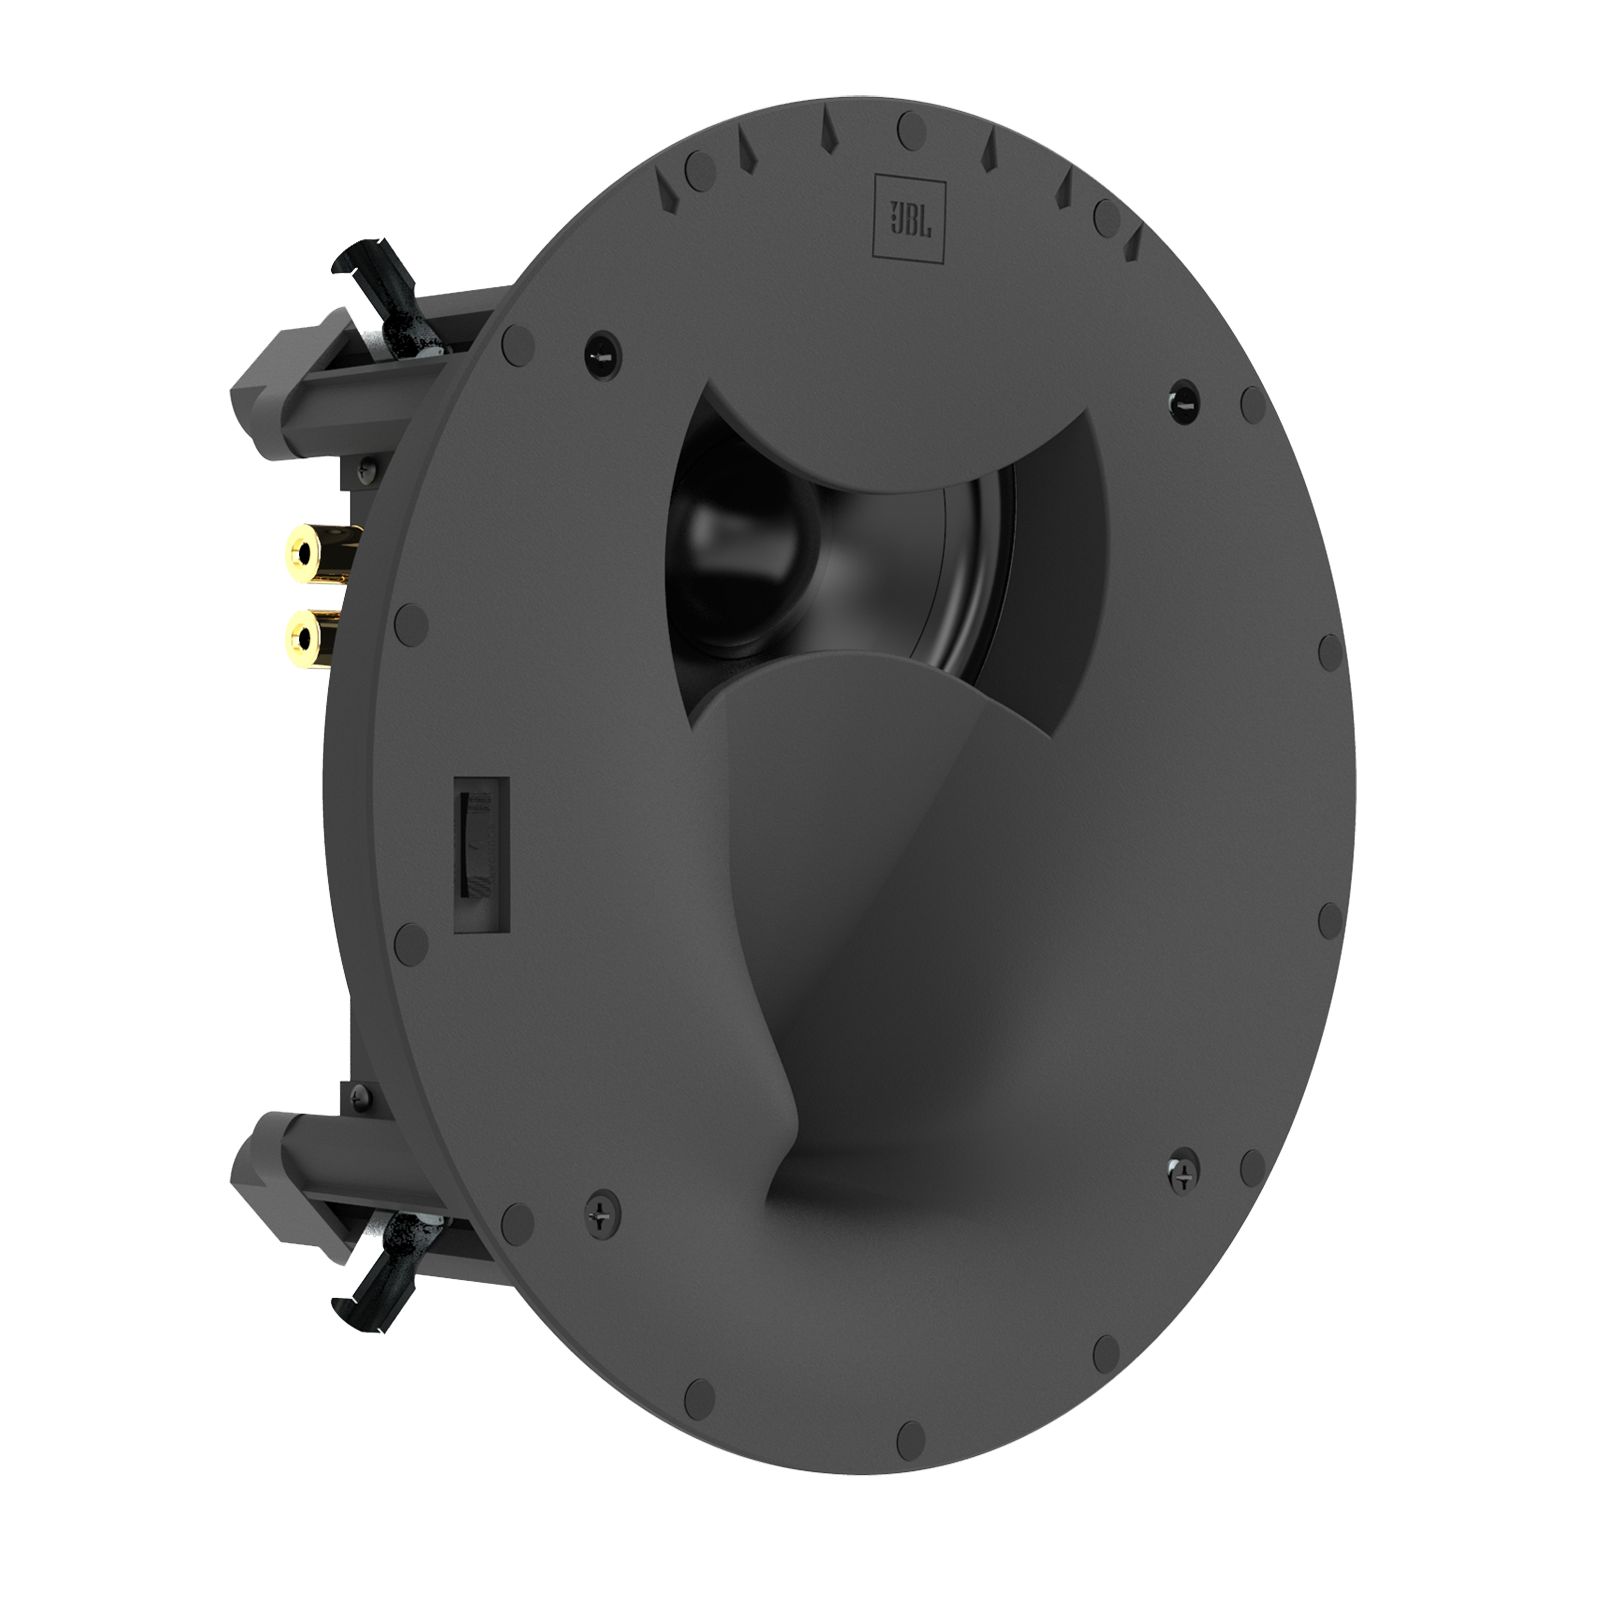 SCL-8 - Black - 2-Way 5.25-inch (130mm) In-Ceiling Loudspeaker - Front